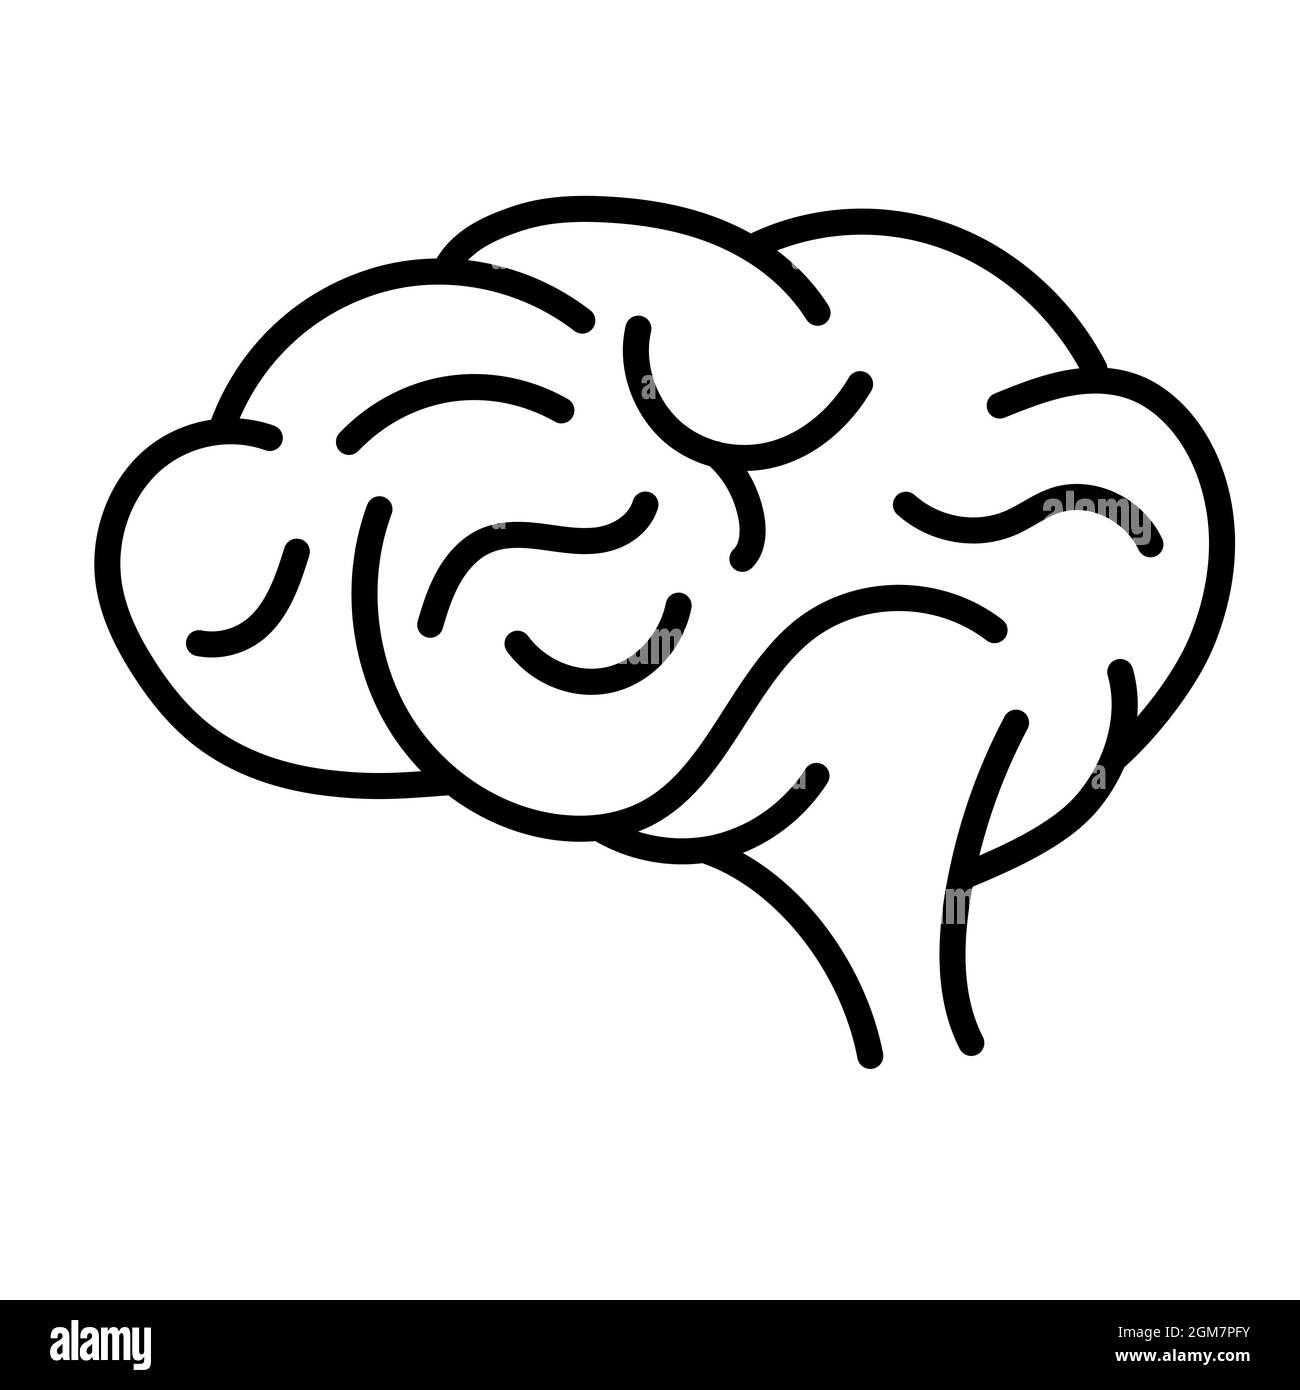 Cartoon brain Black and White Stock Photos & Images - Alamy